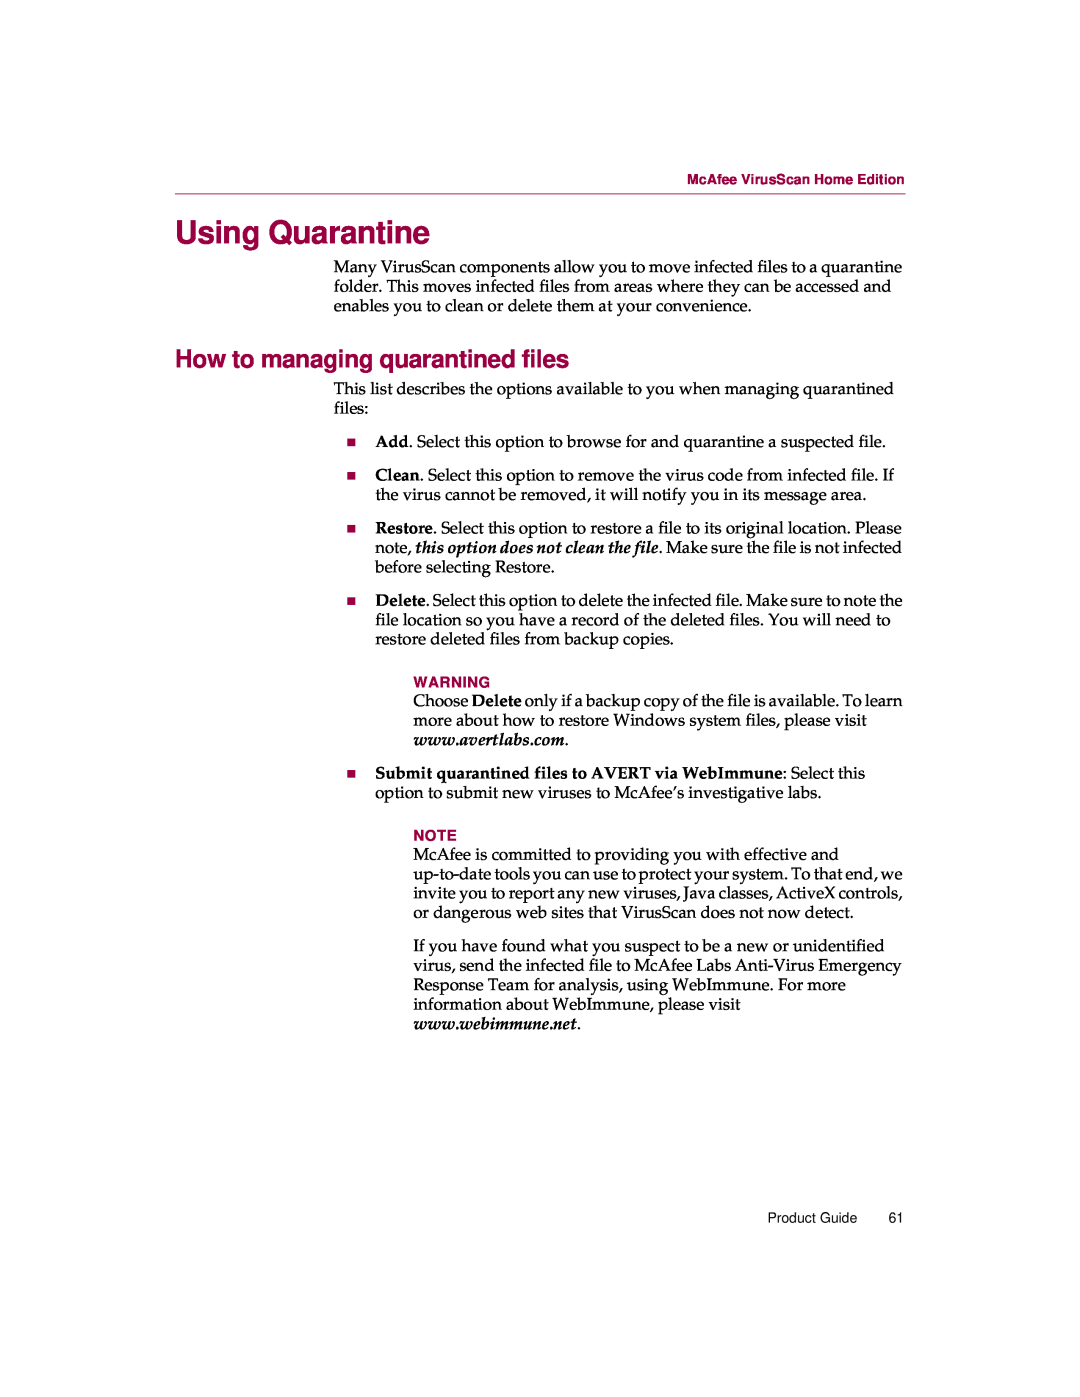 McAfee 5 manual Using Quarantine, How to managing quarantined files 